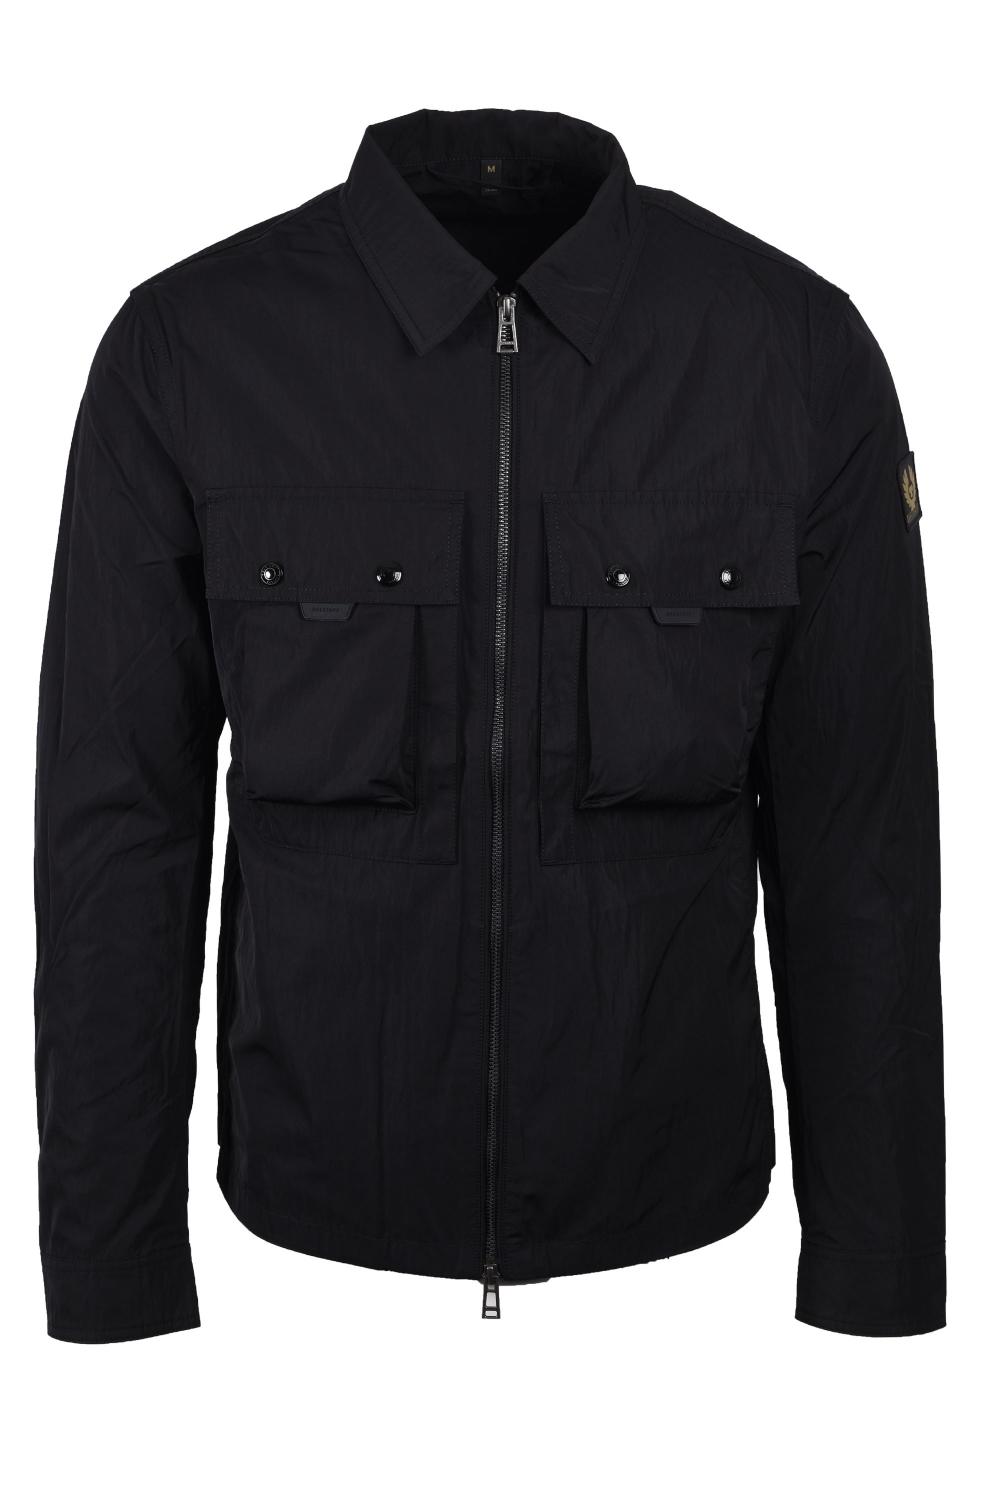 Belstaff Tactical Black Crinkle Overshirt Shackett Jacket